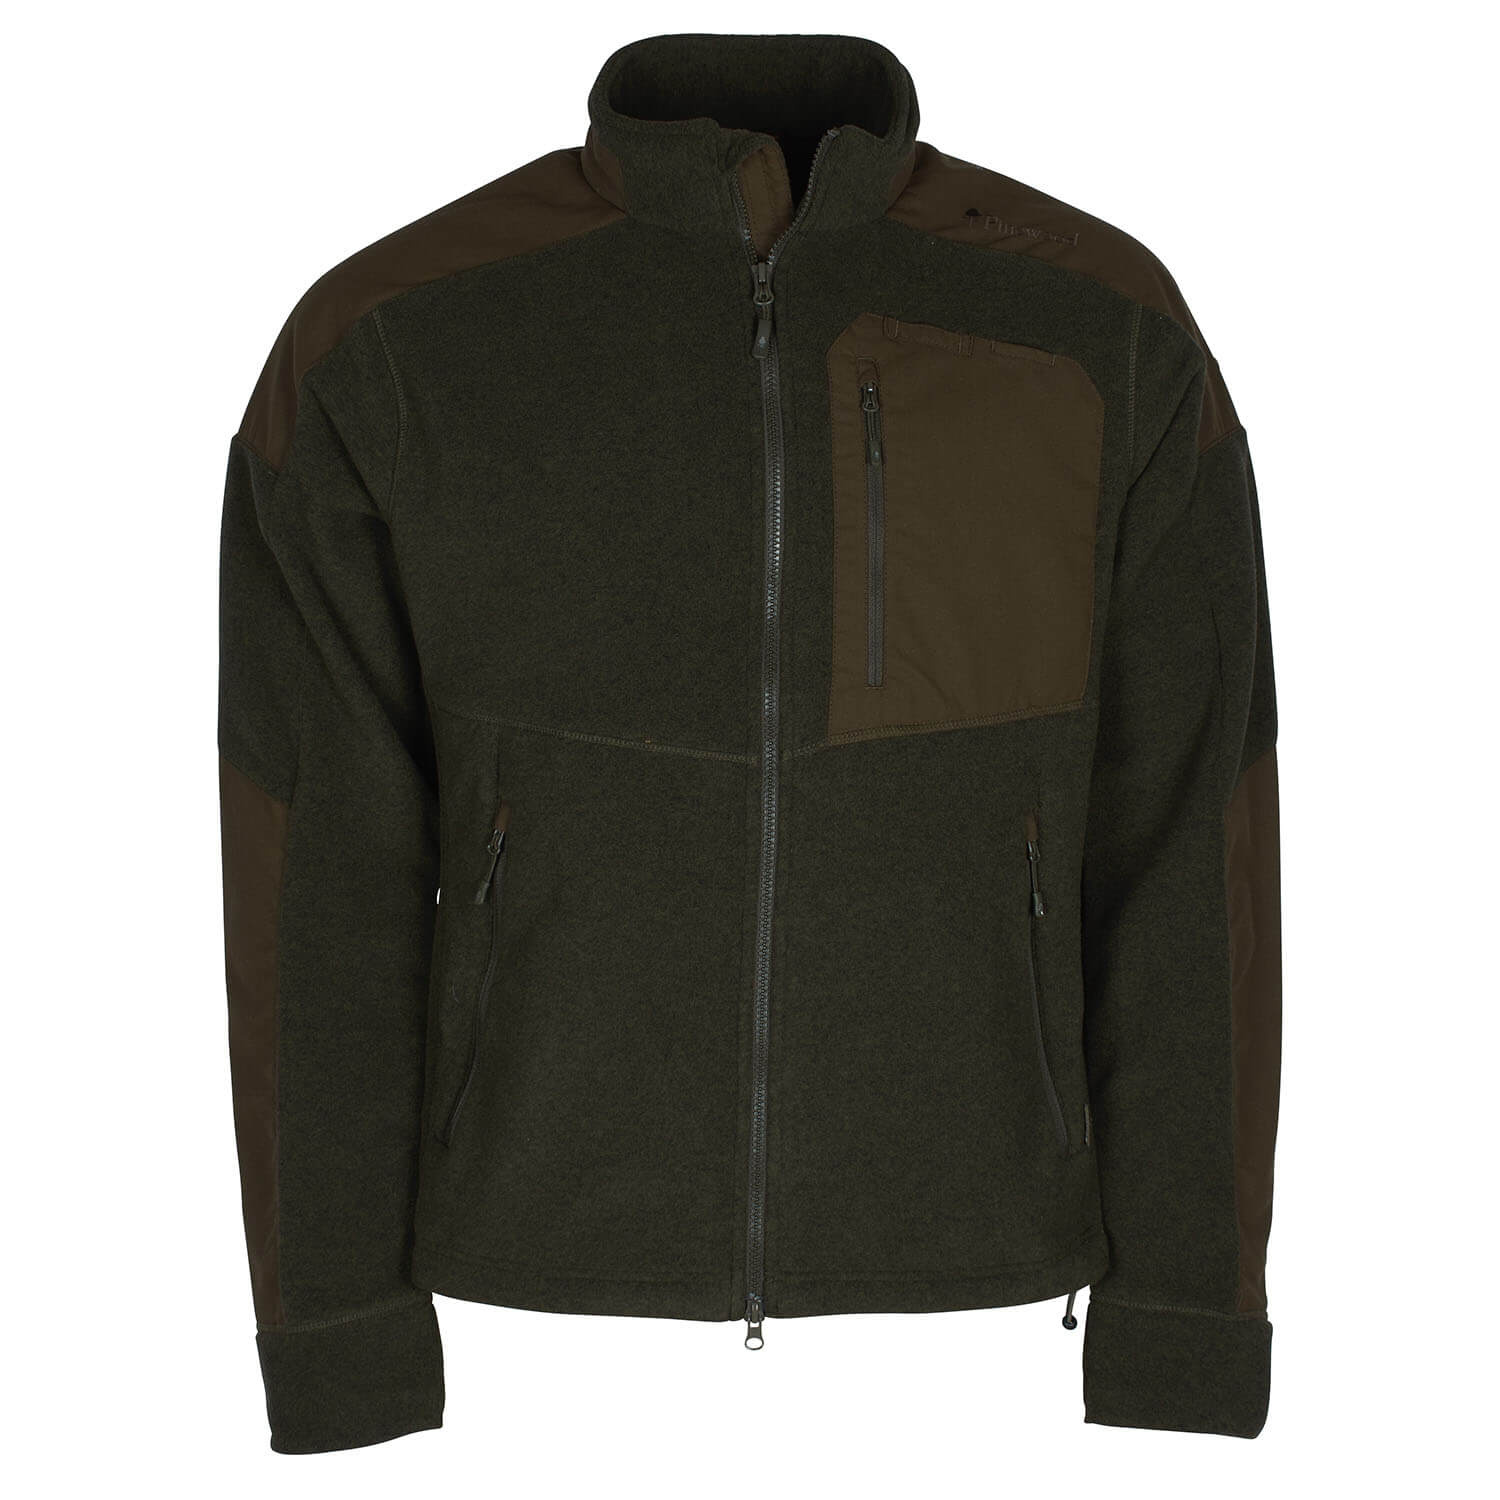 Pinewood Fleece jacket Smaland Forest - Hunting Jackets